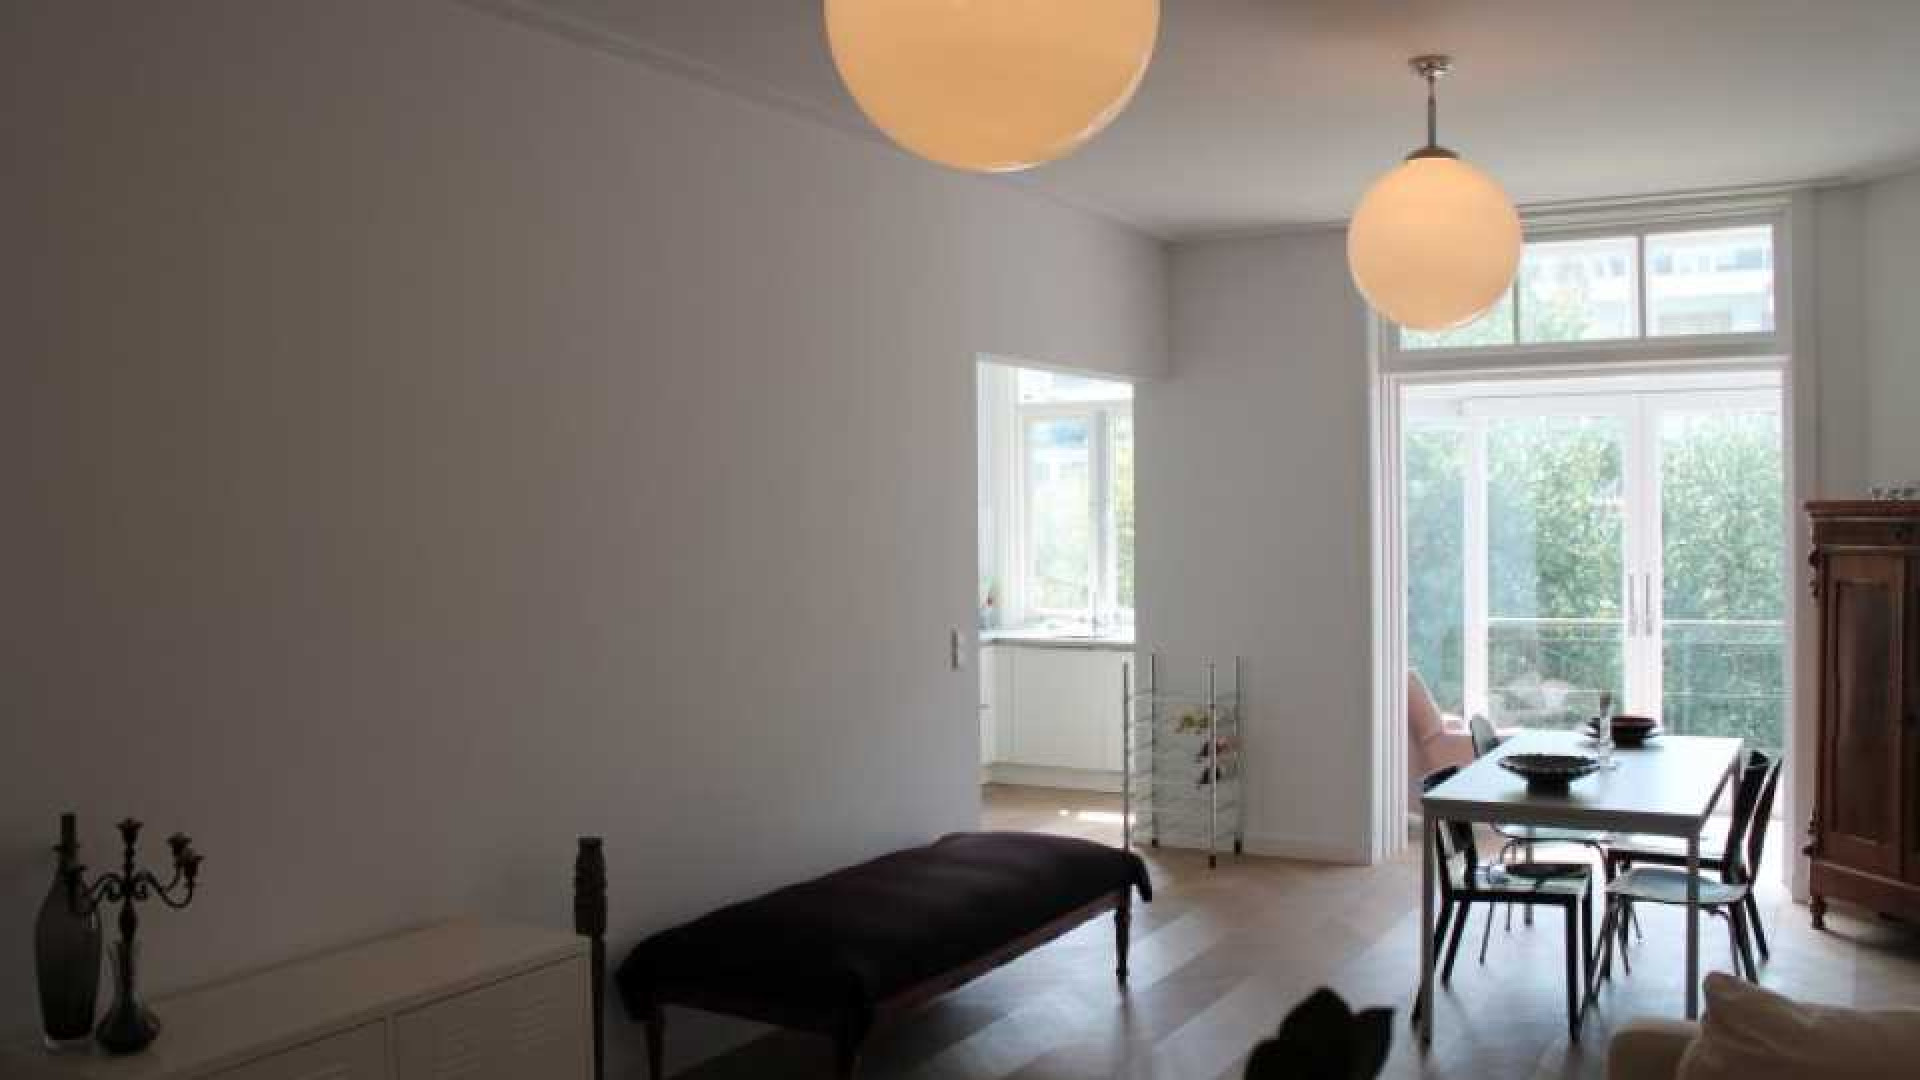 Dave Roelvink huurt appartement in Amsterdam Oud-Zuid. Zie foto's 2